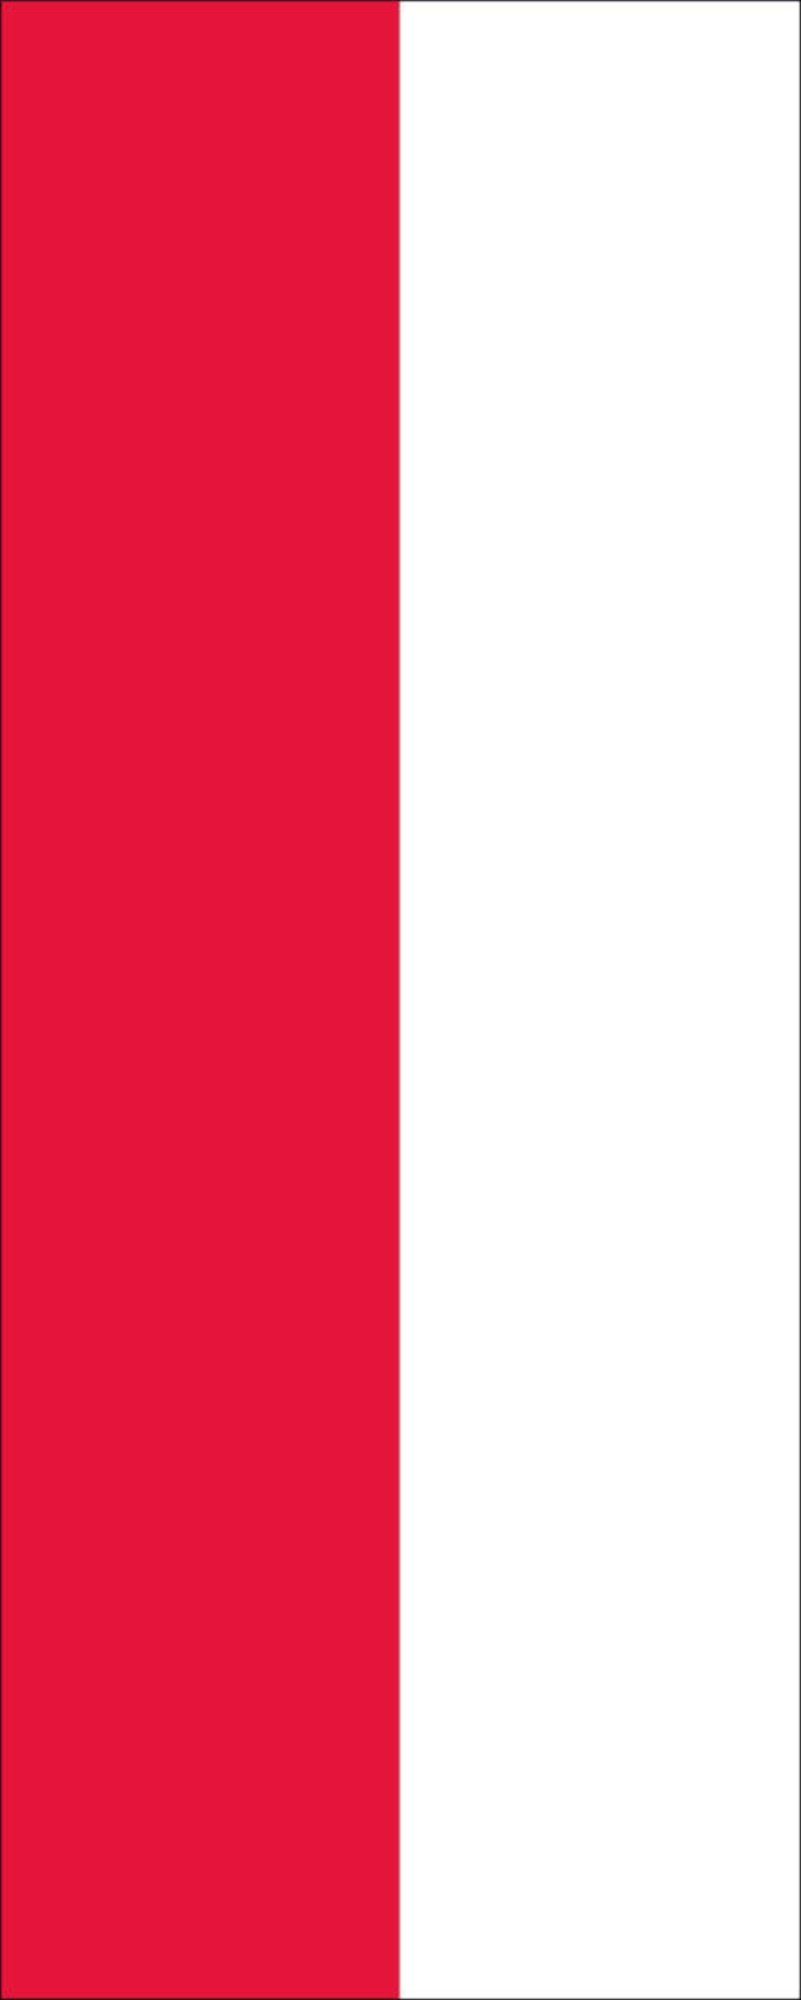 flaggenmeer Flagge Flagge Schützenfest Rot Weiß 110 g/m² Hochformat